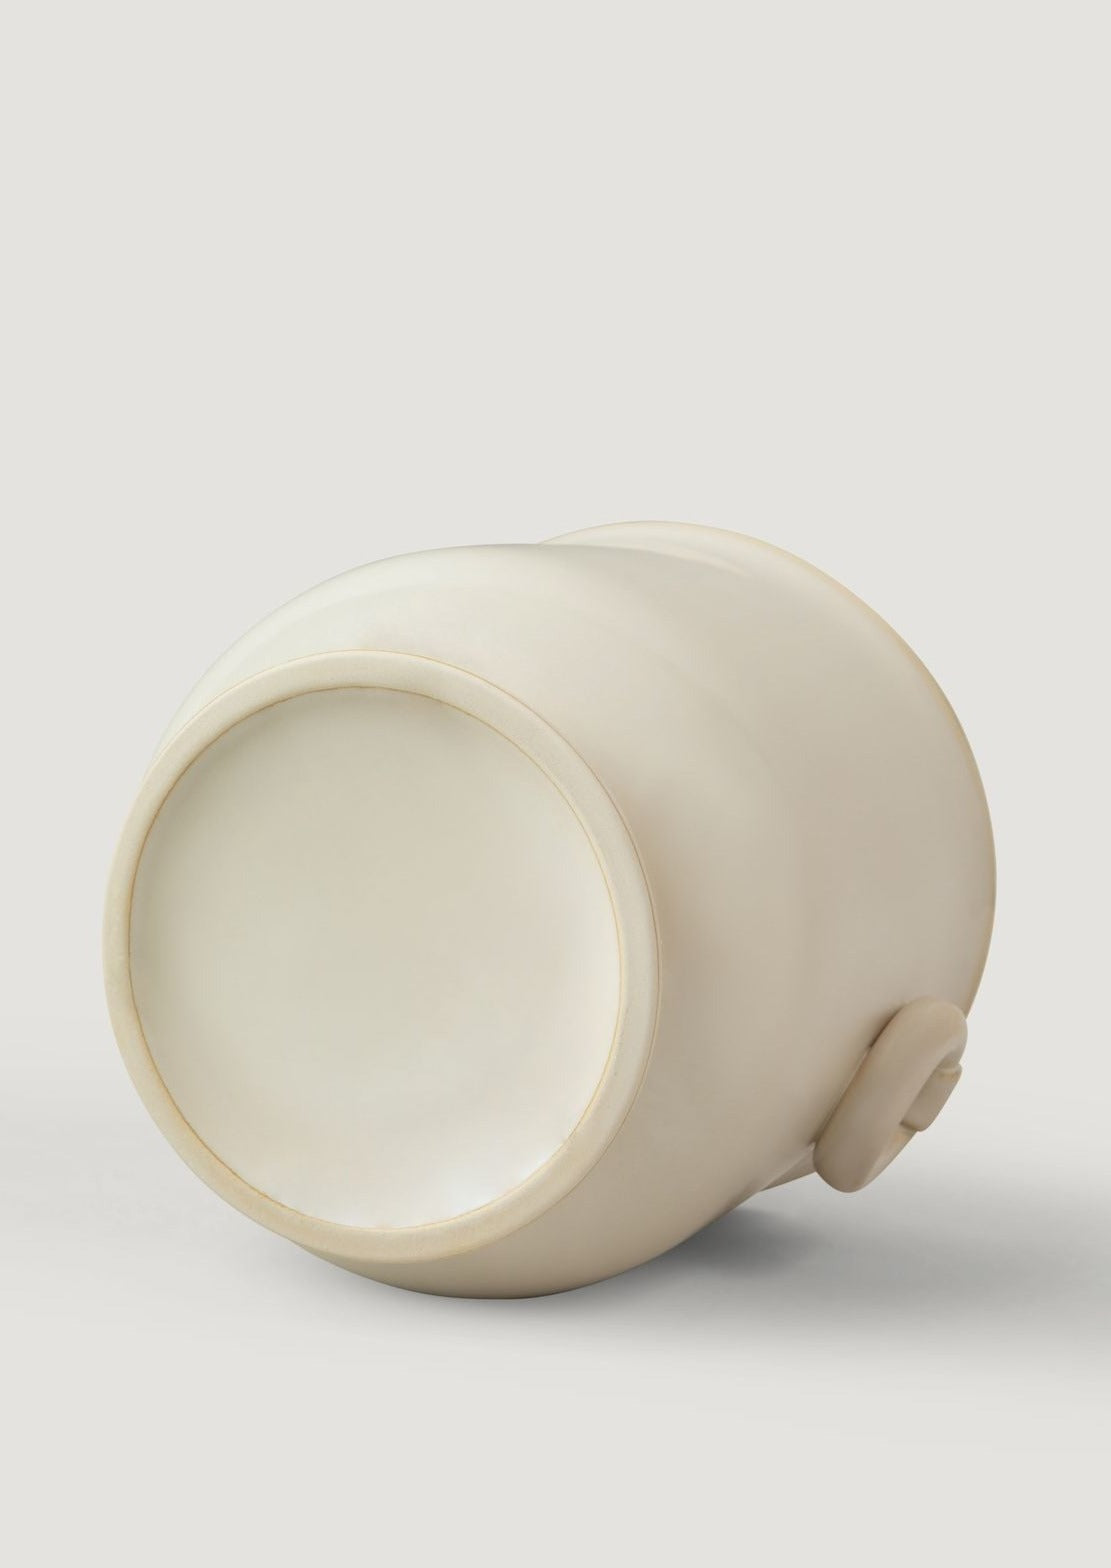 Bottom of Ceramic Cache Pot